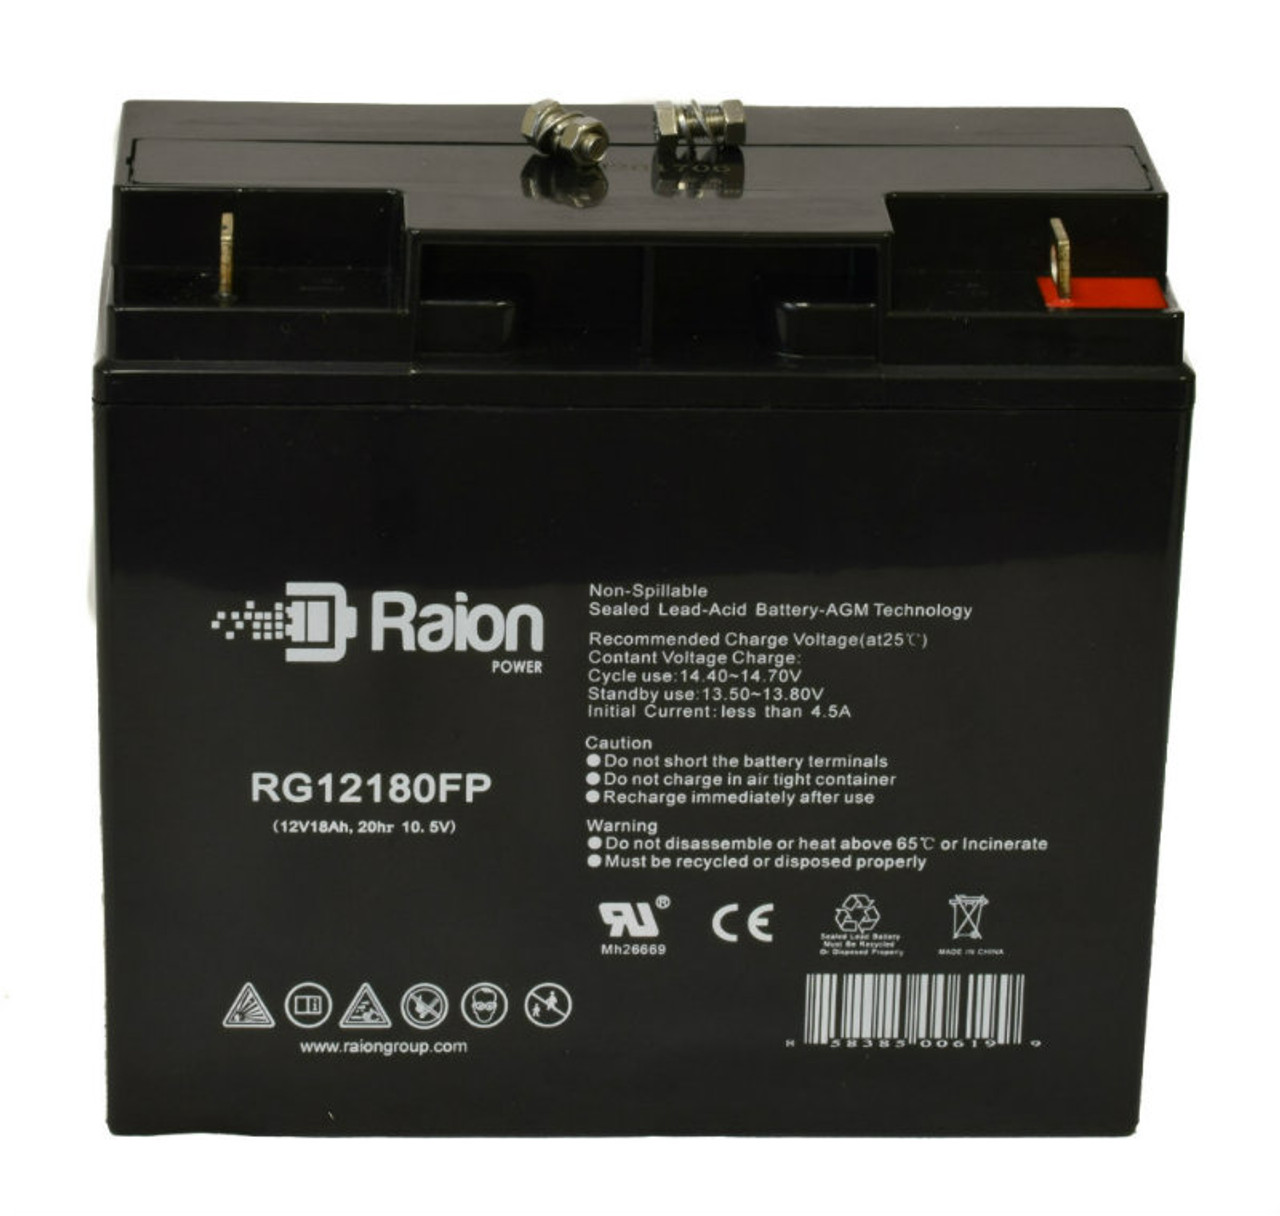 Raion Power RG12180FP 12V 18Ah Lead Acid Battery for Unibo GB12-18